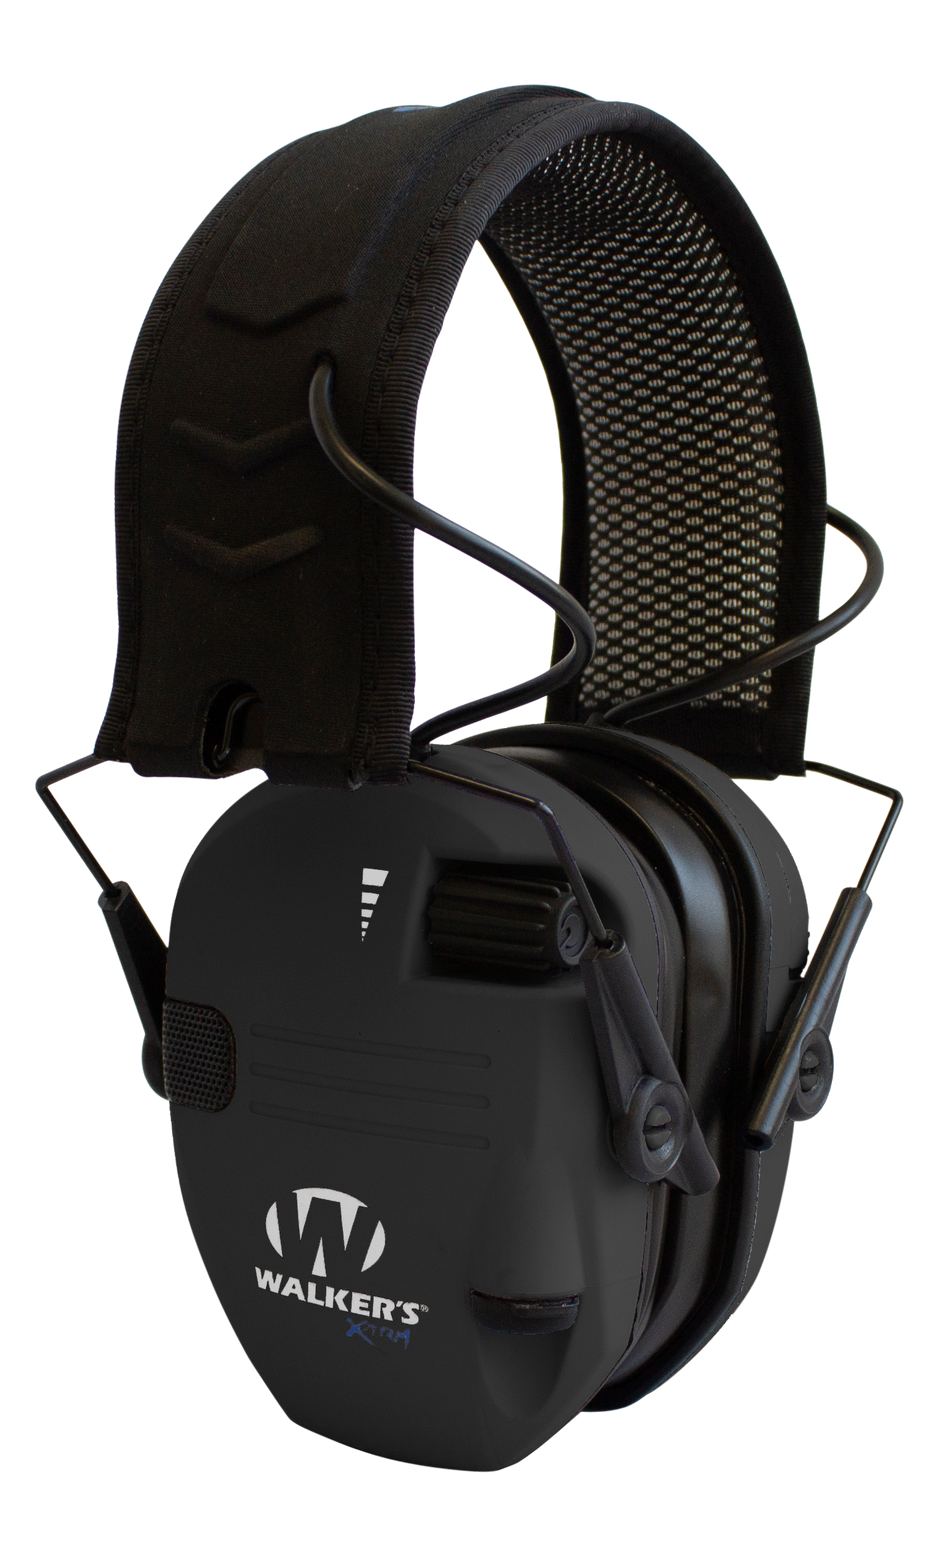 Walkers Razor X-TRM Muffs Electronic Ear Protection - Black